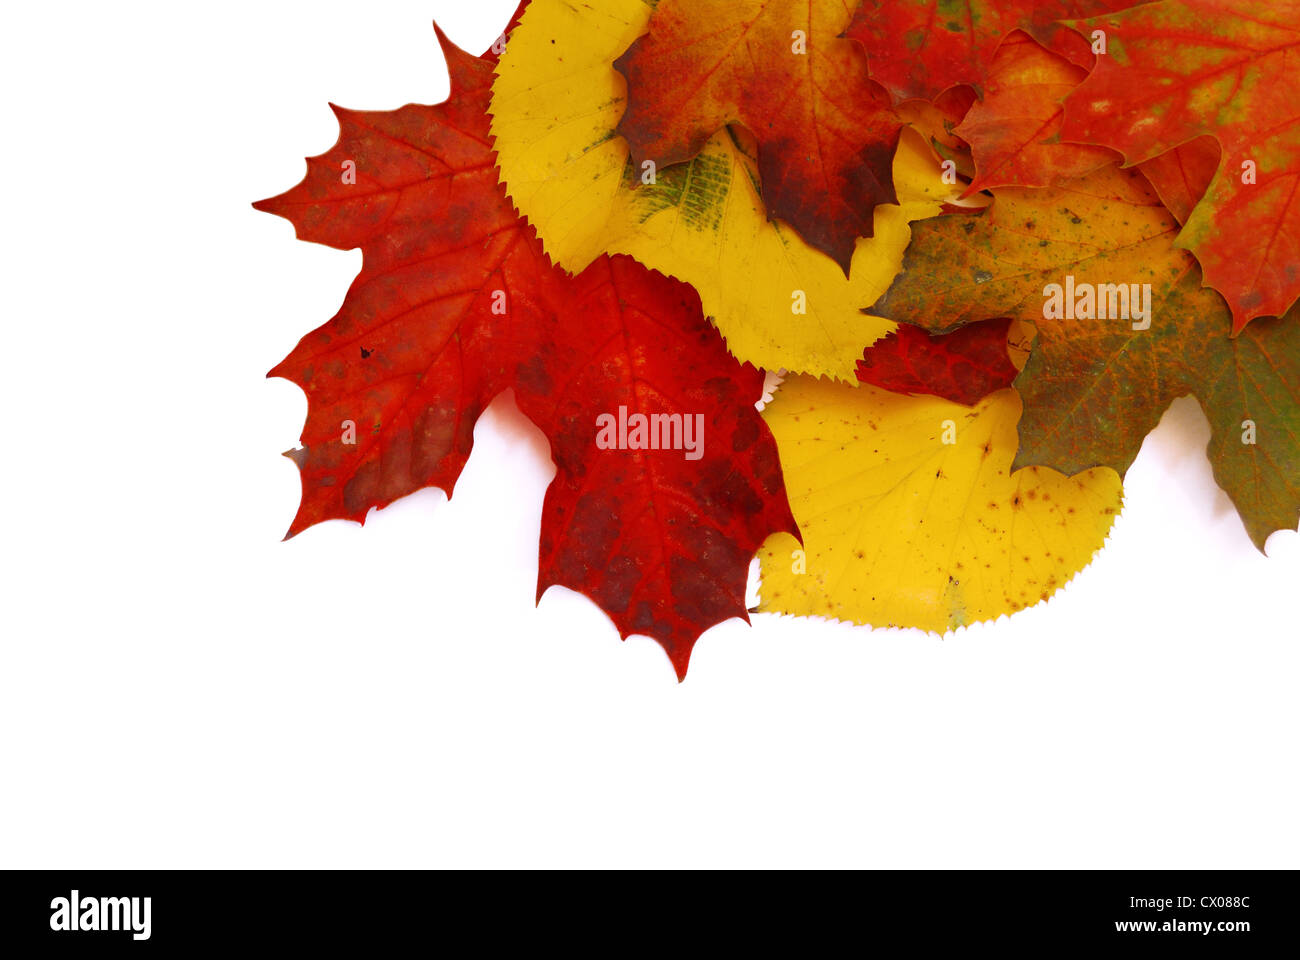 Colorful autumn leaves isolated on white background. Stock photo Stock Photo